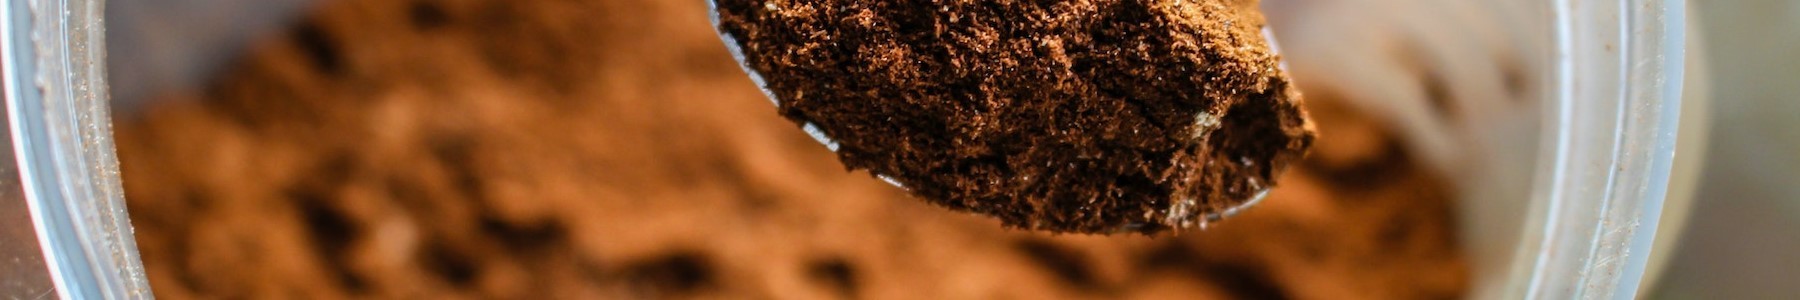 Comprar cacao online | Tienda de Cacao Online | Ledmacafeyte ®